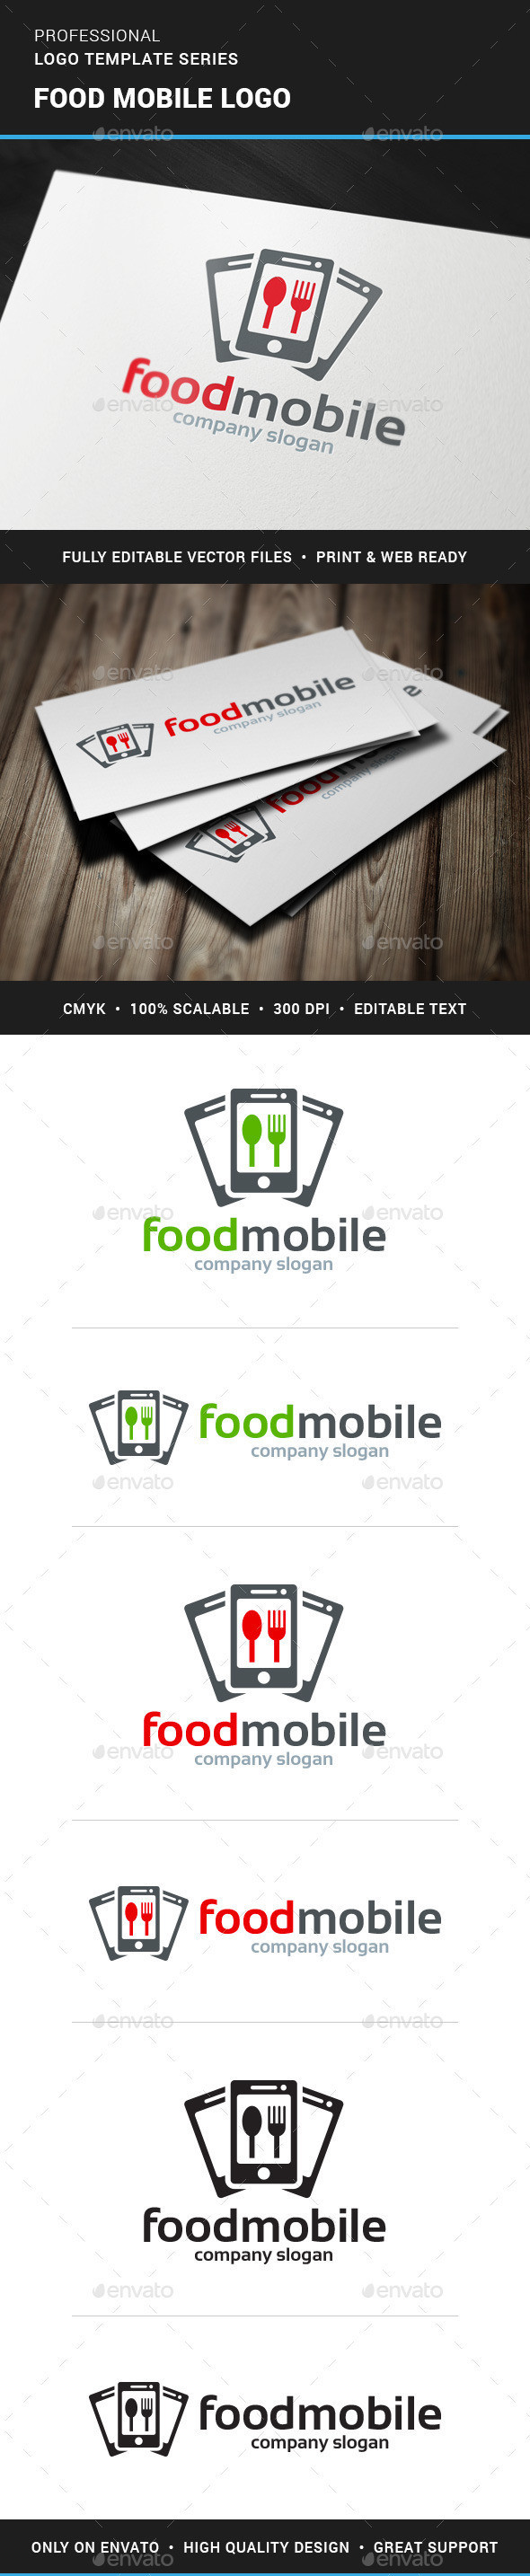 Food mobile logo template